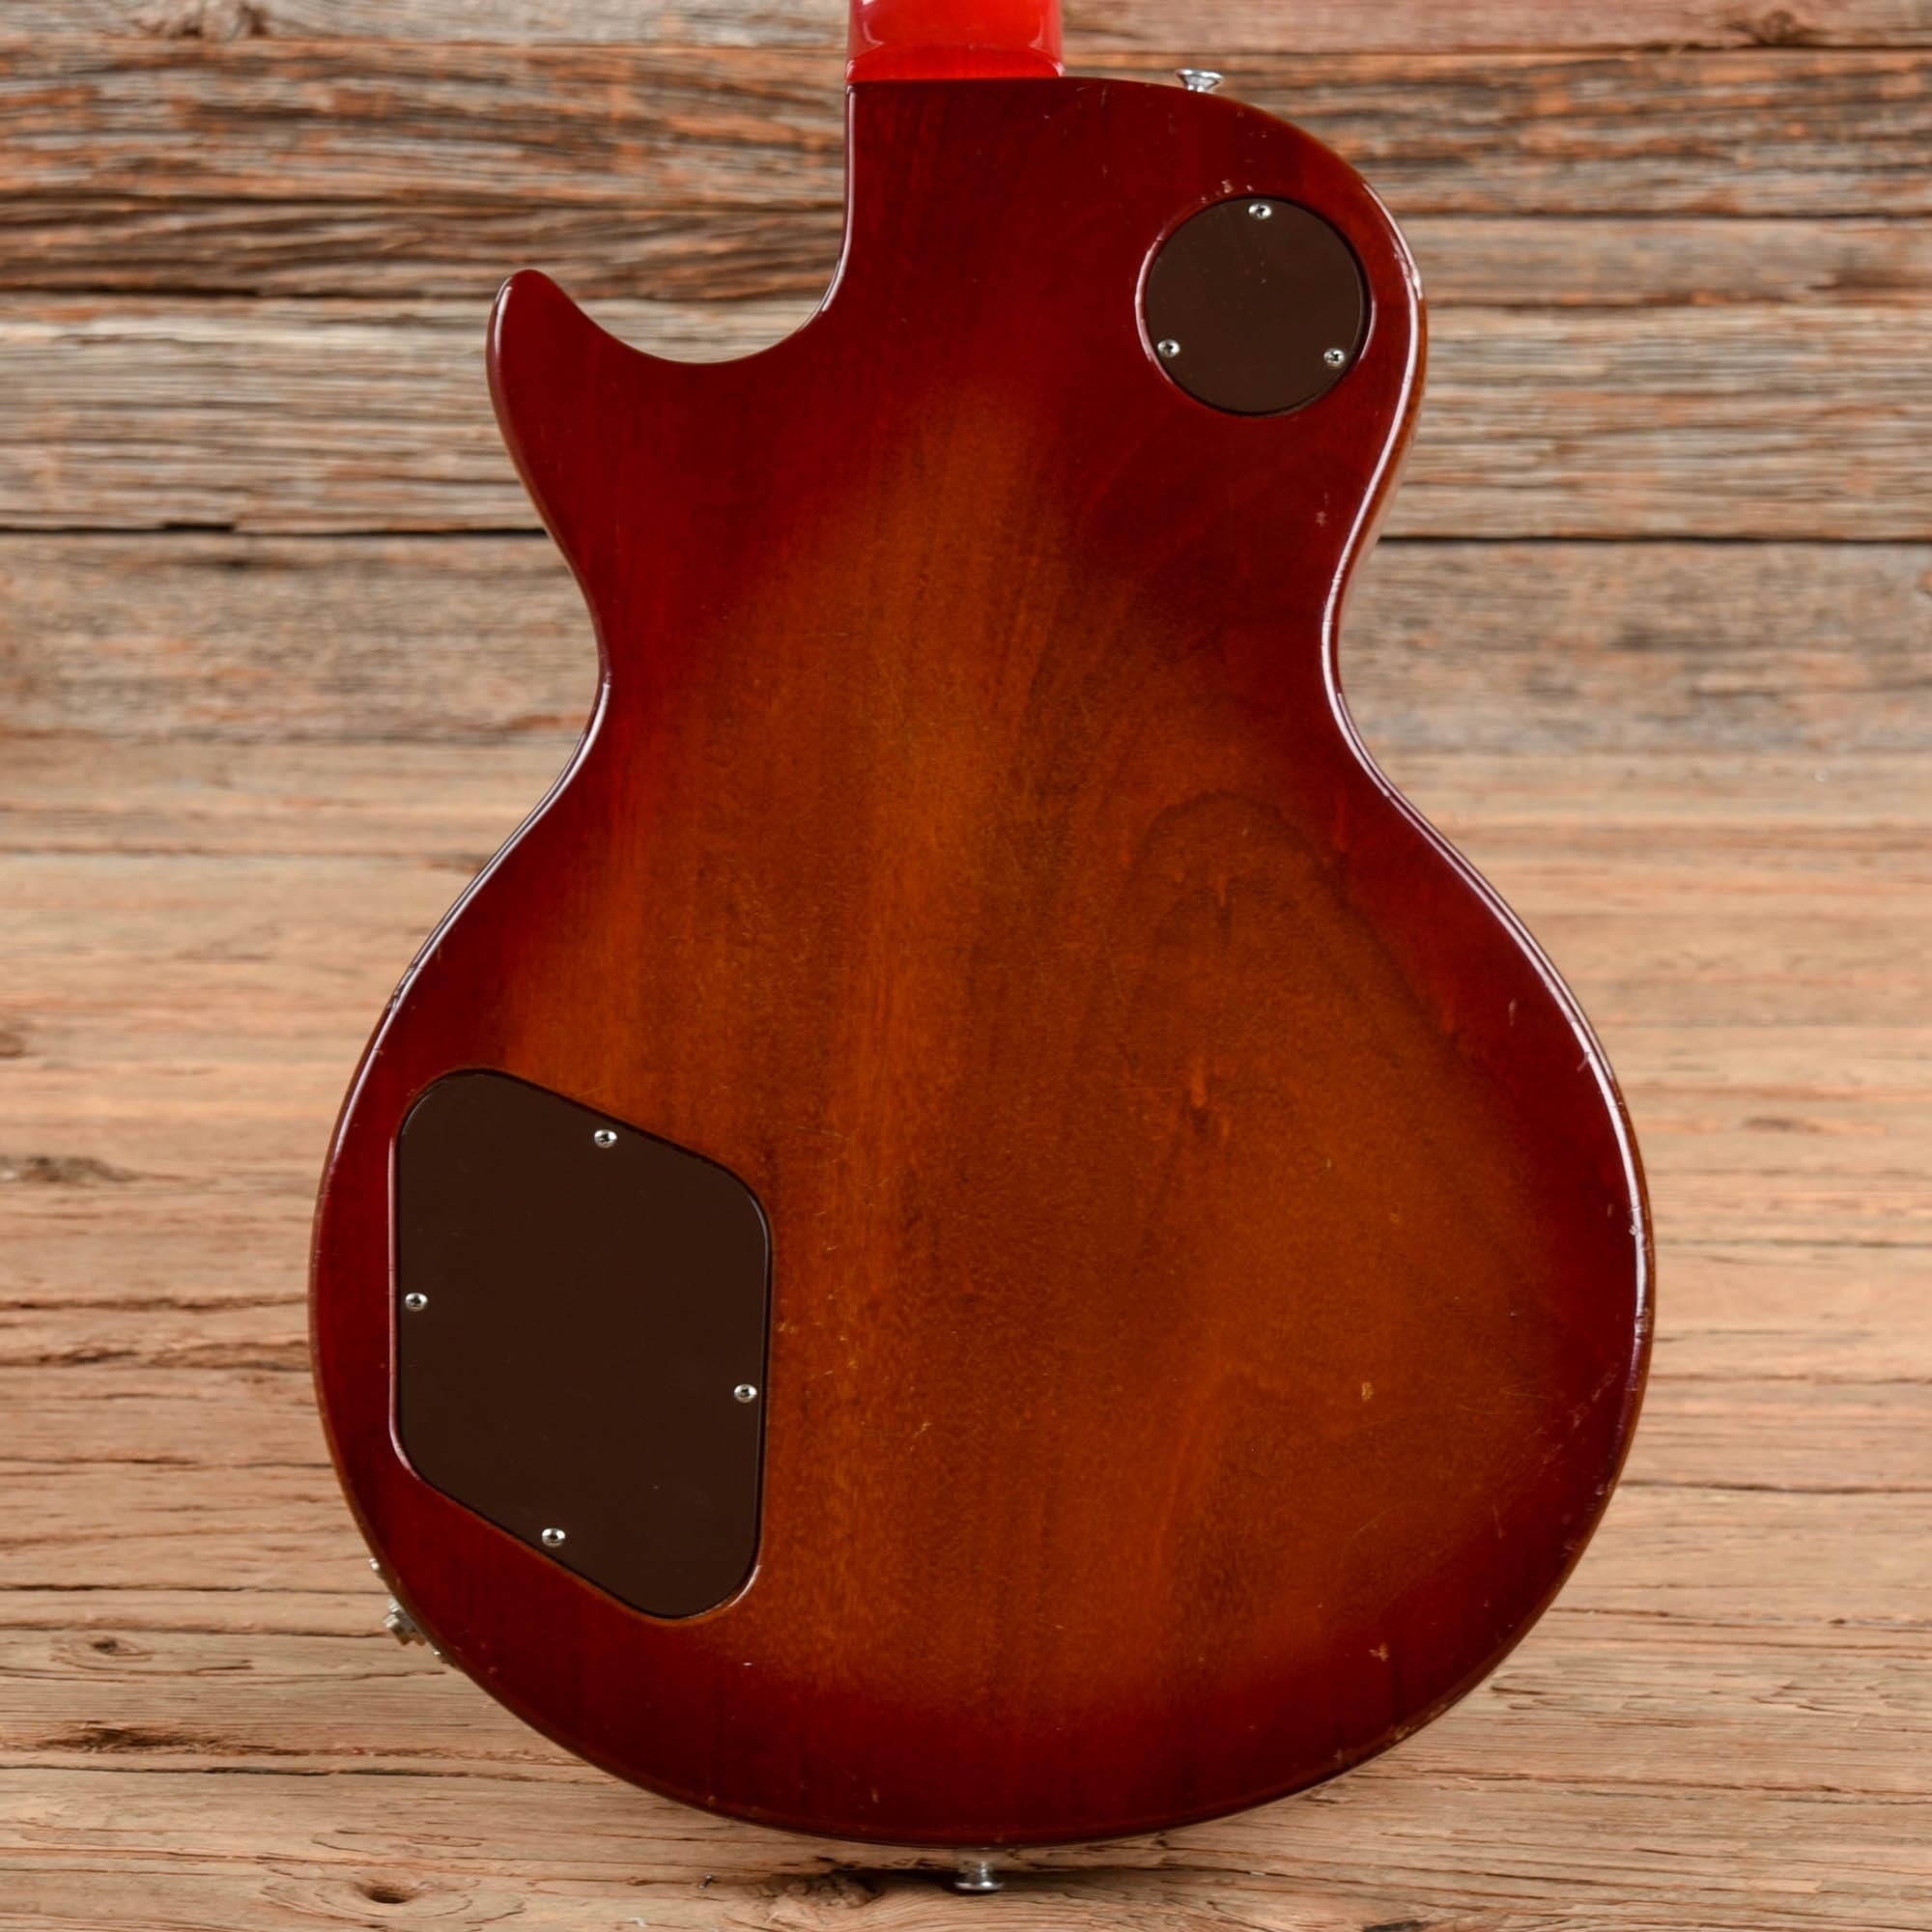 Gibson Les Paul Standard Cherry Sunburst 1978 Electric Guitars / Solid Body